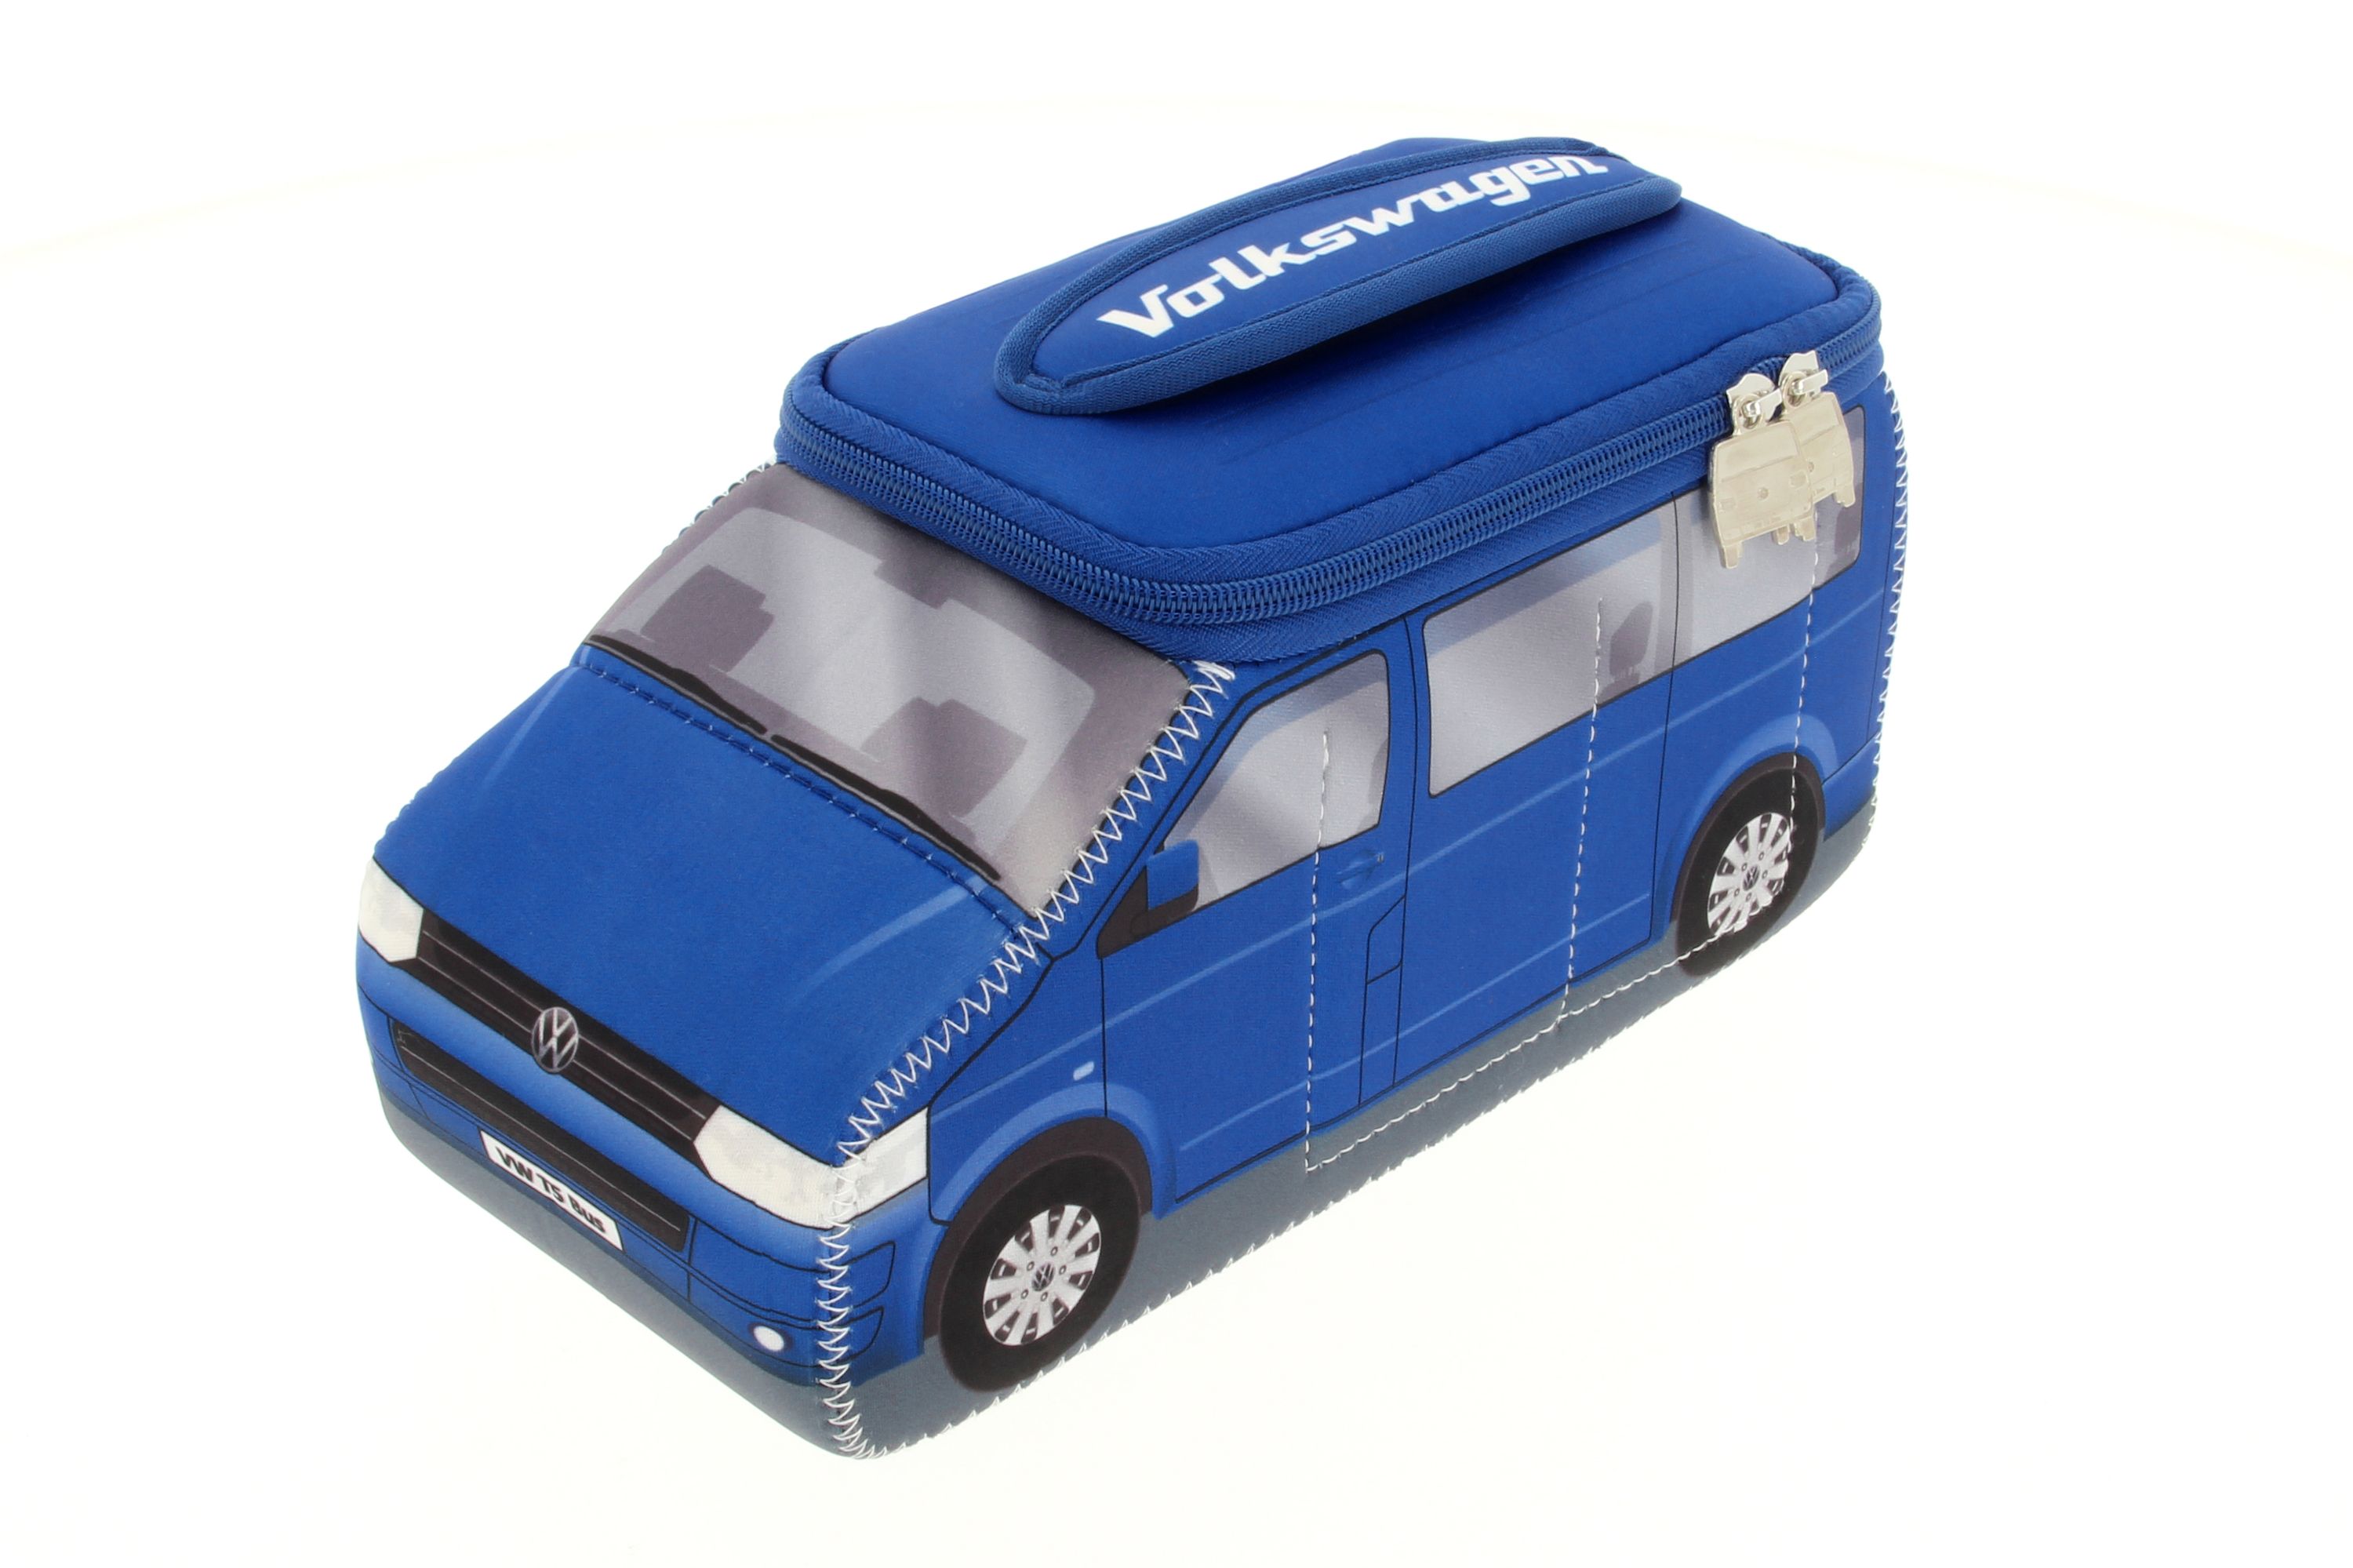 Bolsa universal de neopreno VW T5 Bulli Bus 3D - Grande